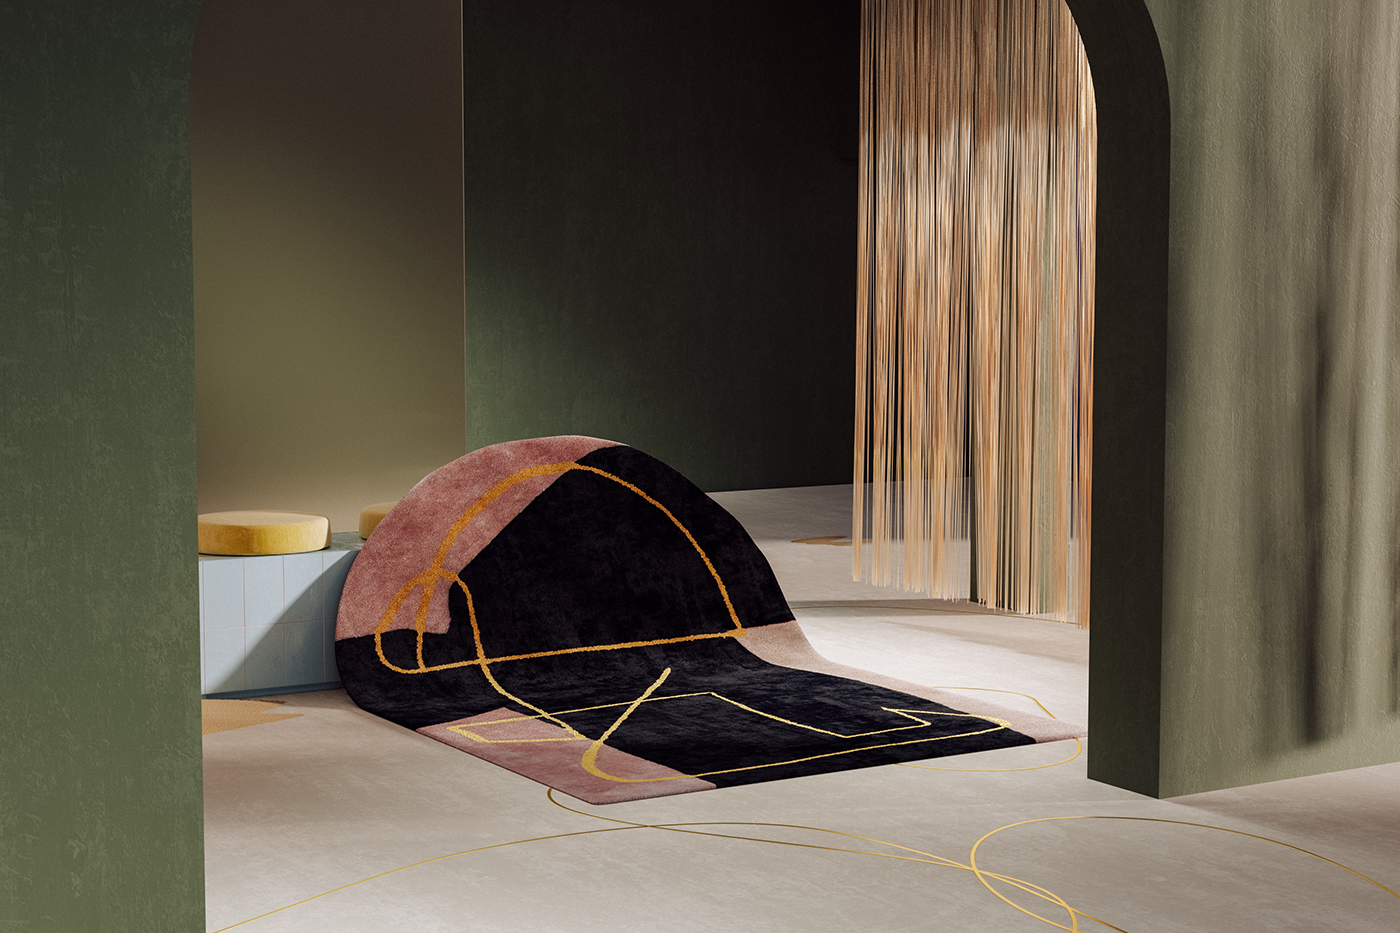 New York Alex Proba studio proba reisinger rugs explorations Interior set design 